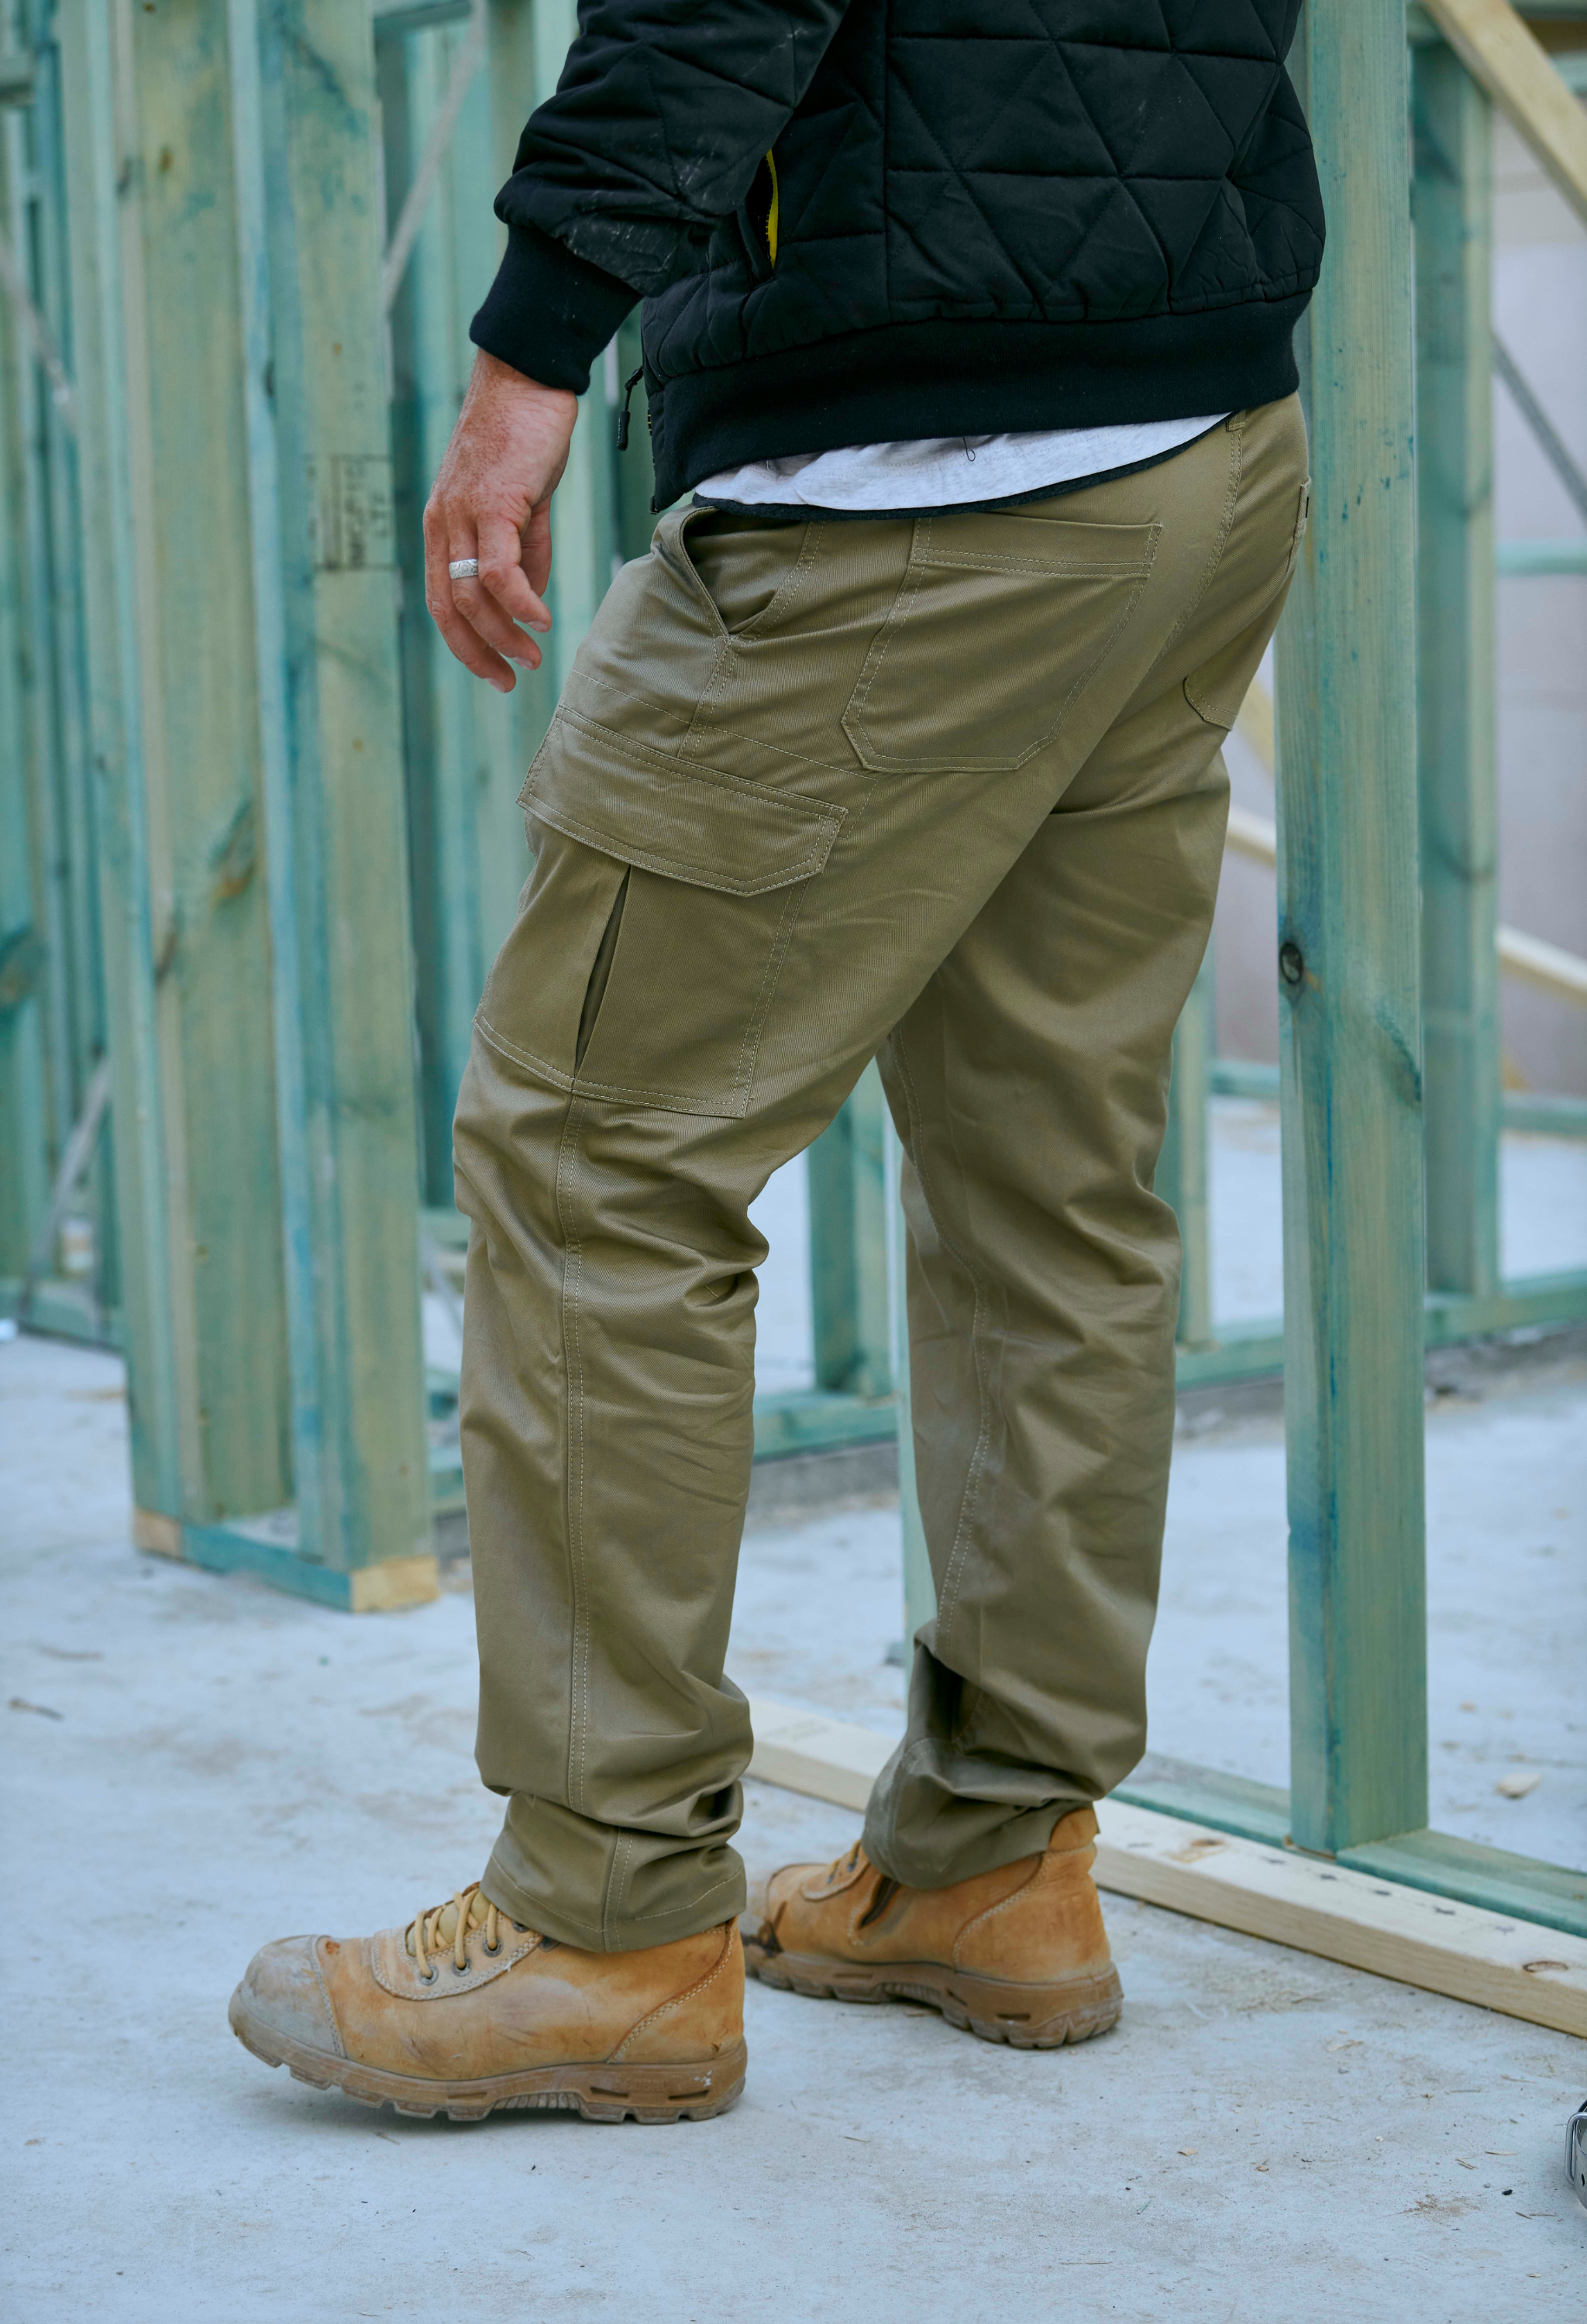 ZKCCNUK Cargo Pants for Men's Cargo Trousers Work Wear Combat Safety Cargo  6 Pocket Full Pants Dark Gray XXXXL on Clearance - Walmart.com